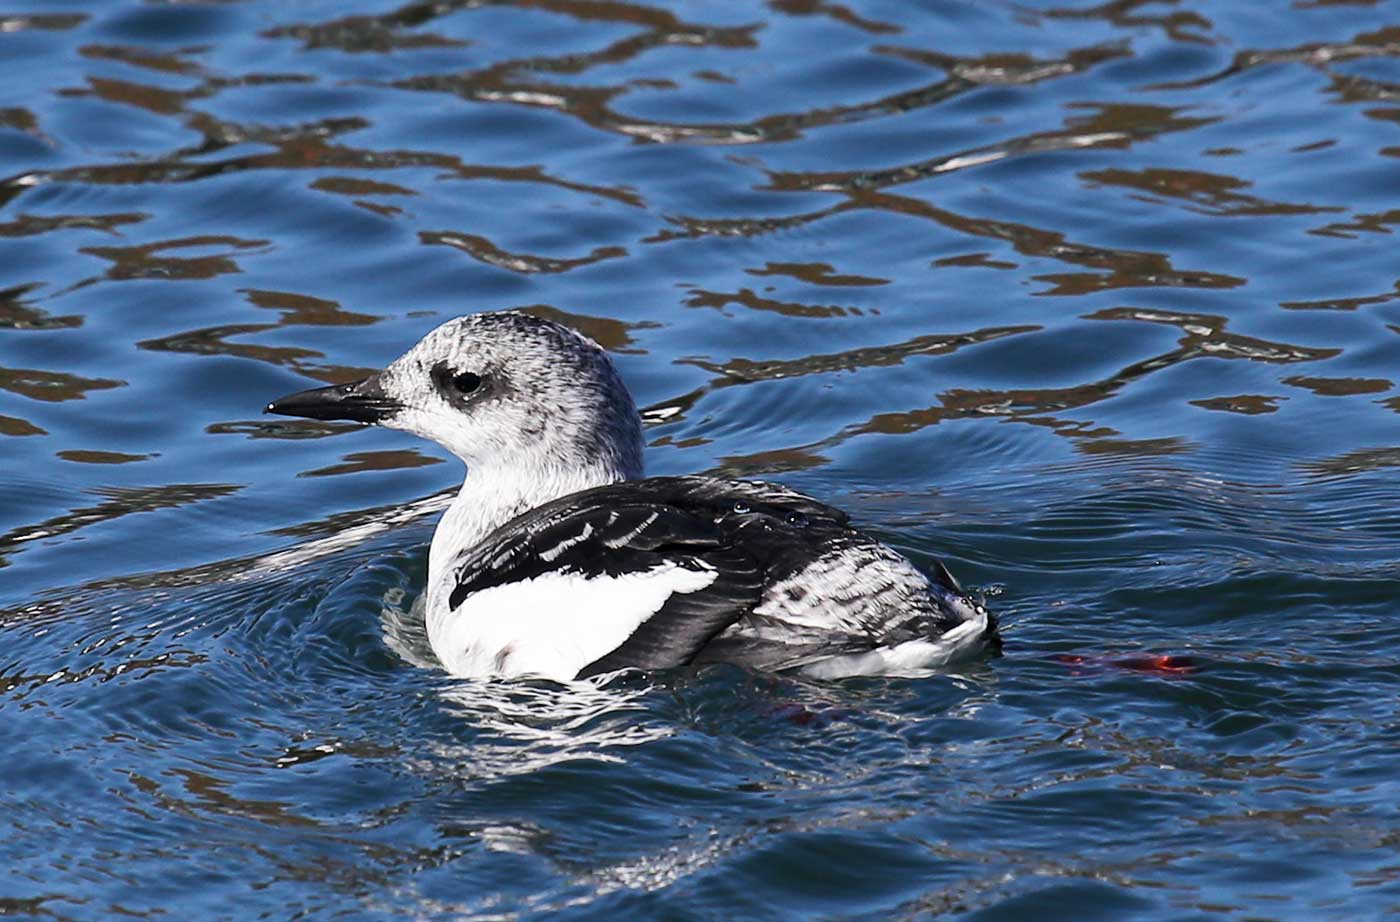 Black Guillemot with winter plumage in water 